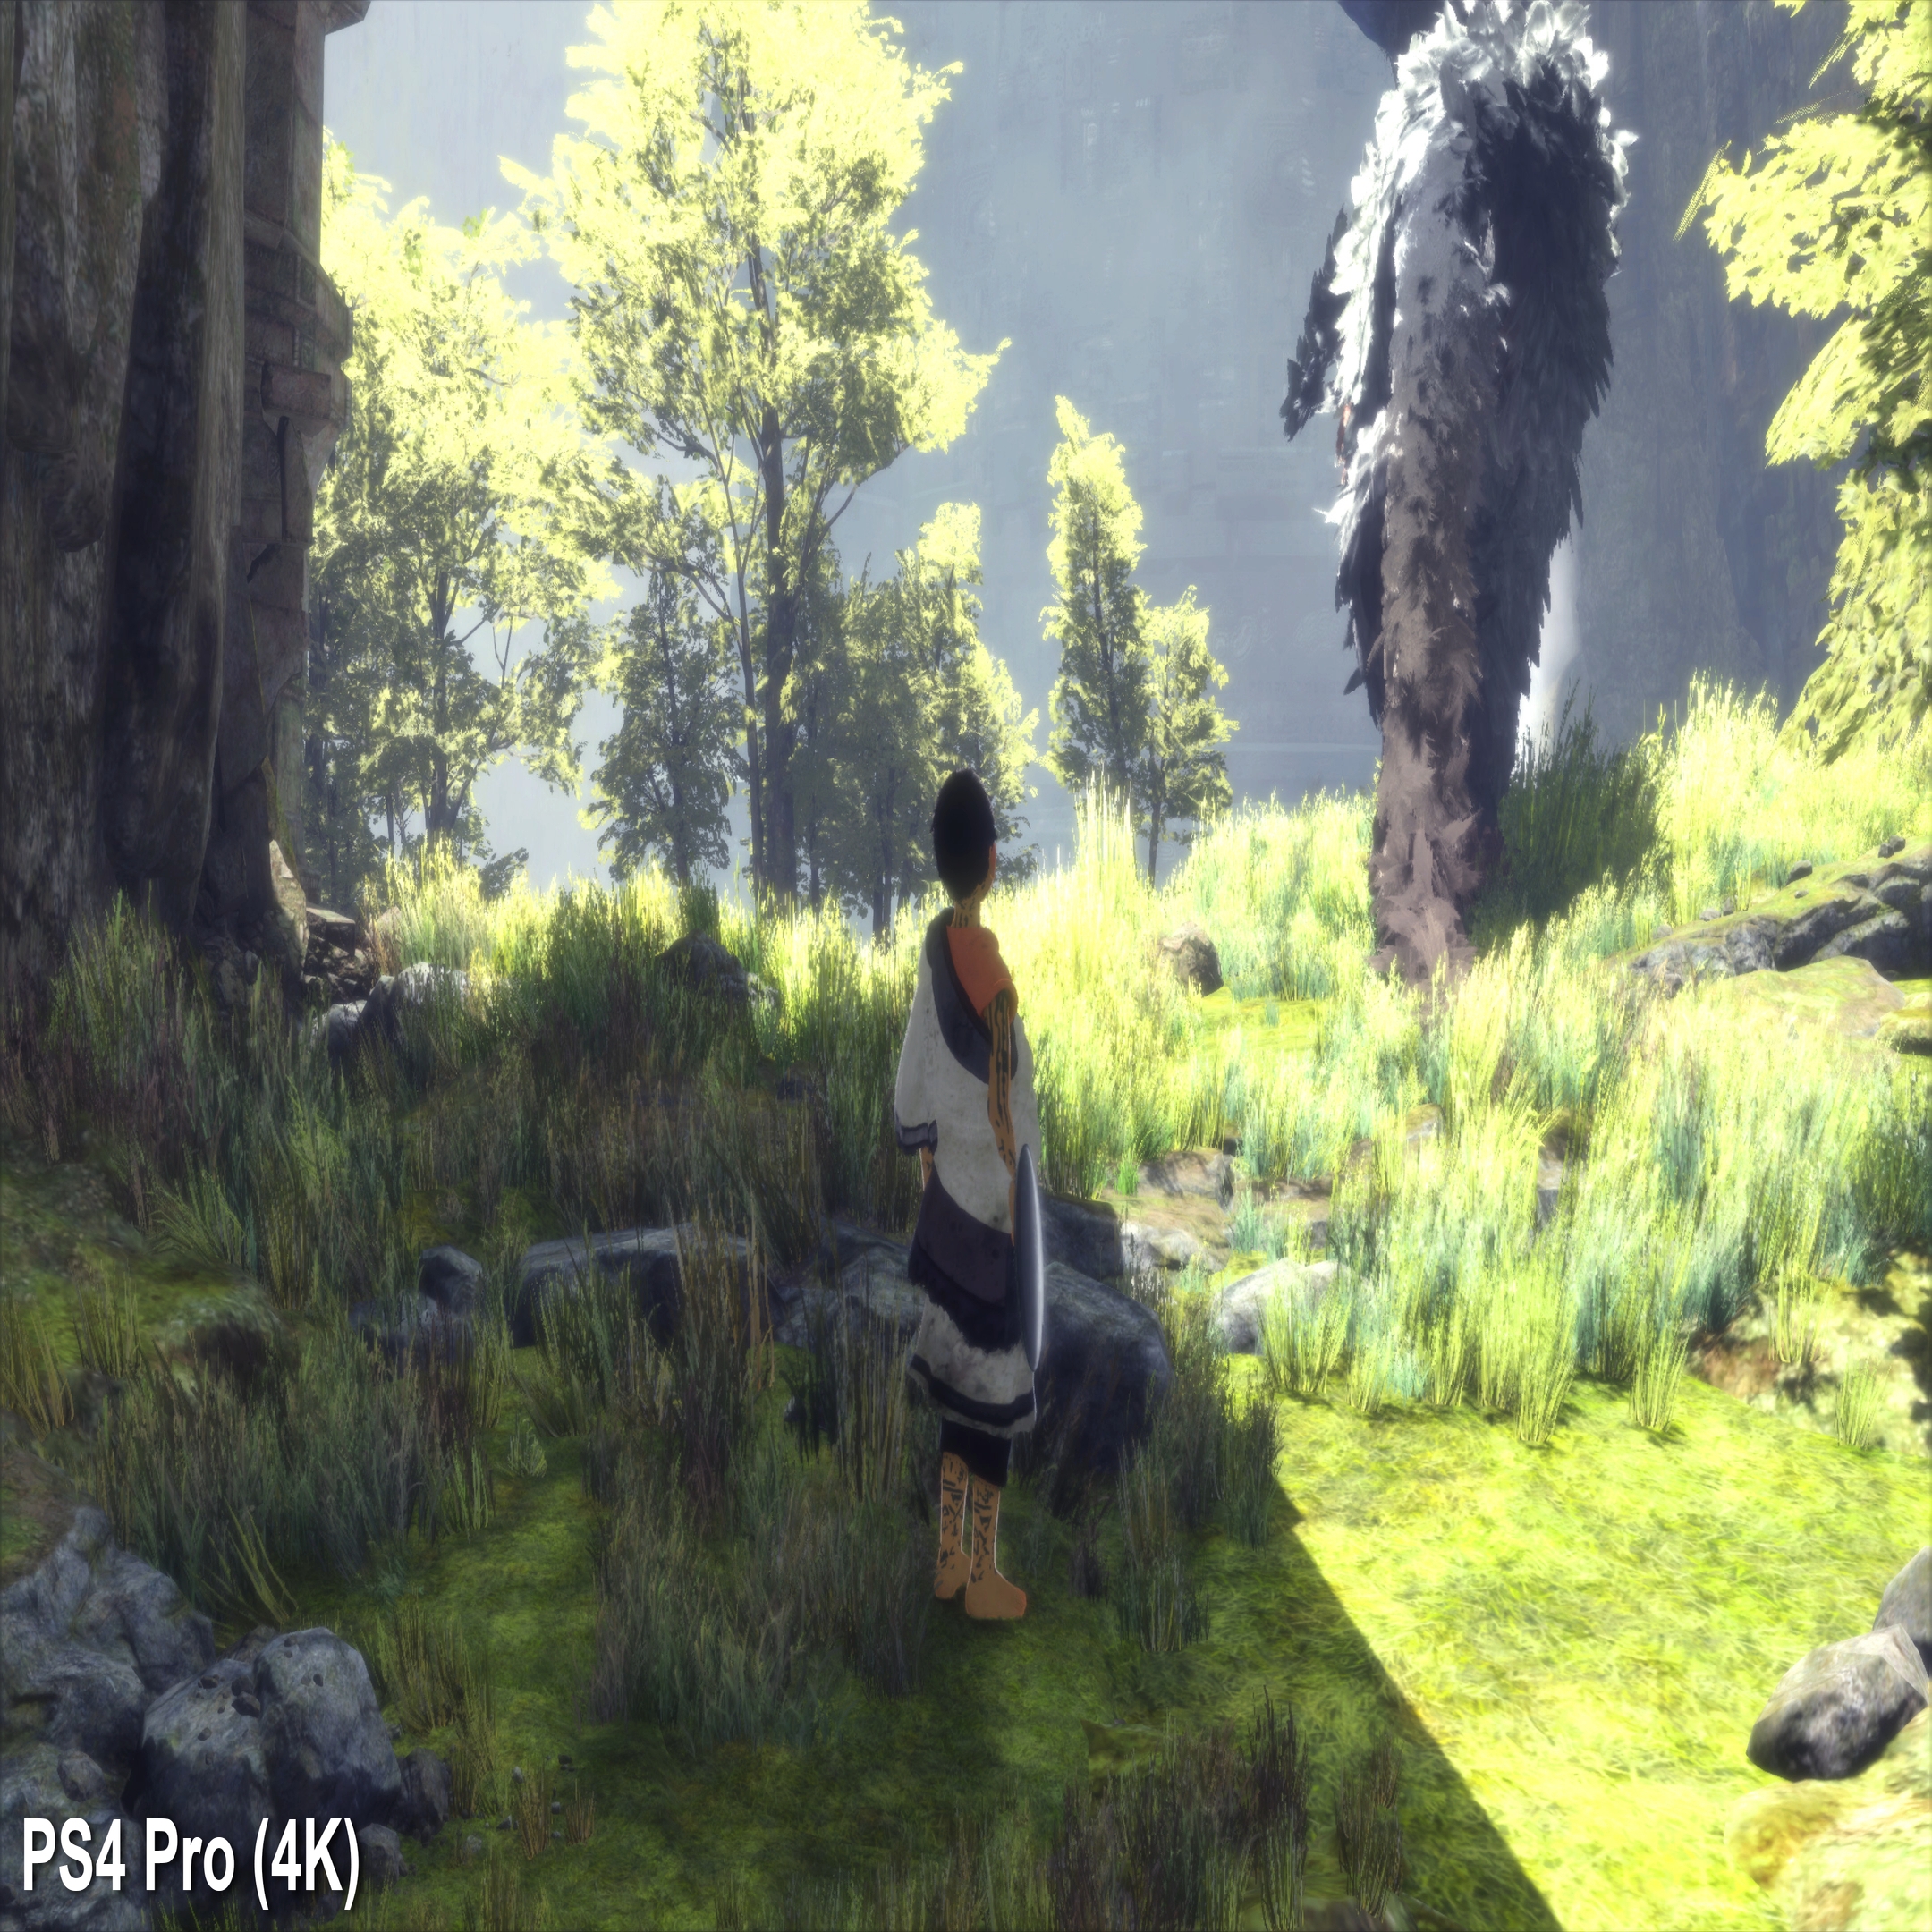 THE LAST GUARDIAN Gameplay Walkthrough Part 1 [4K HD PS4 PRO] - No